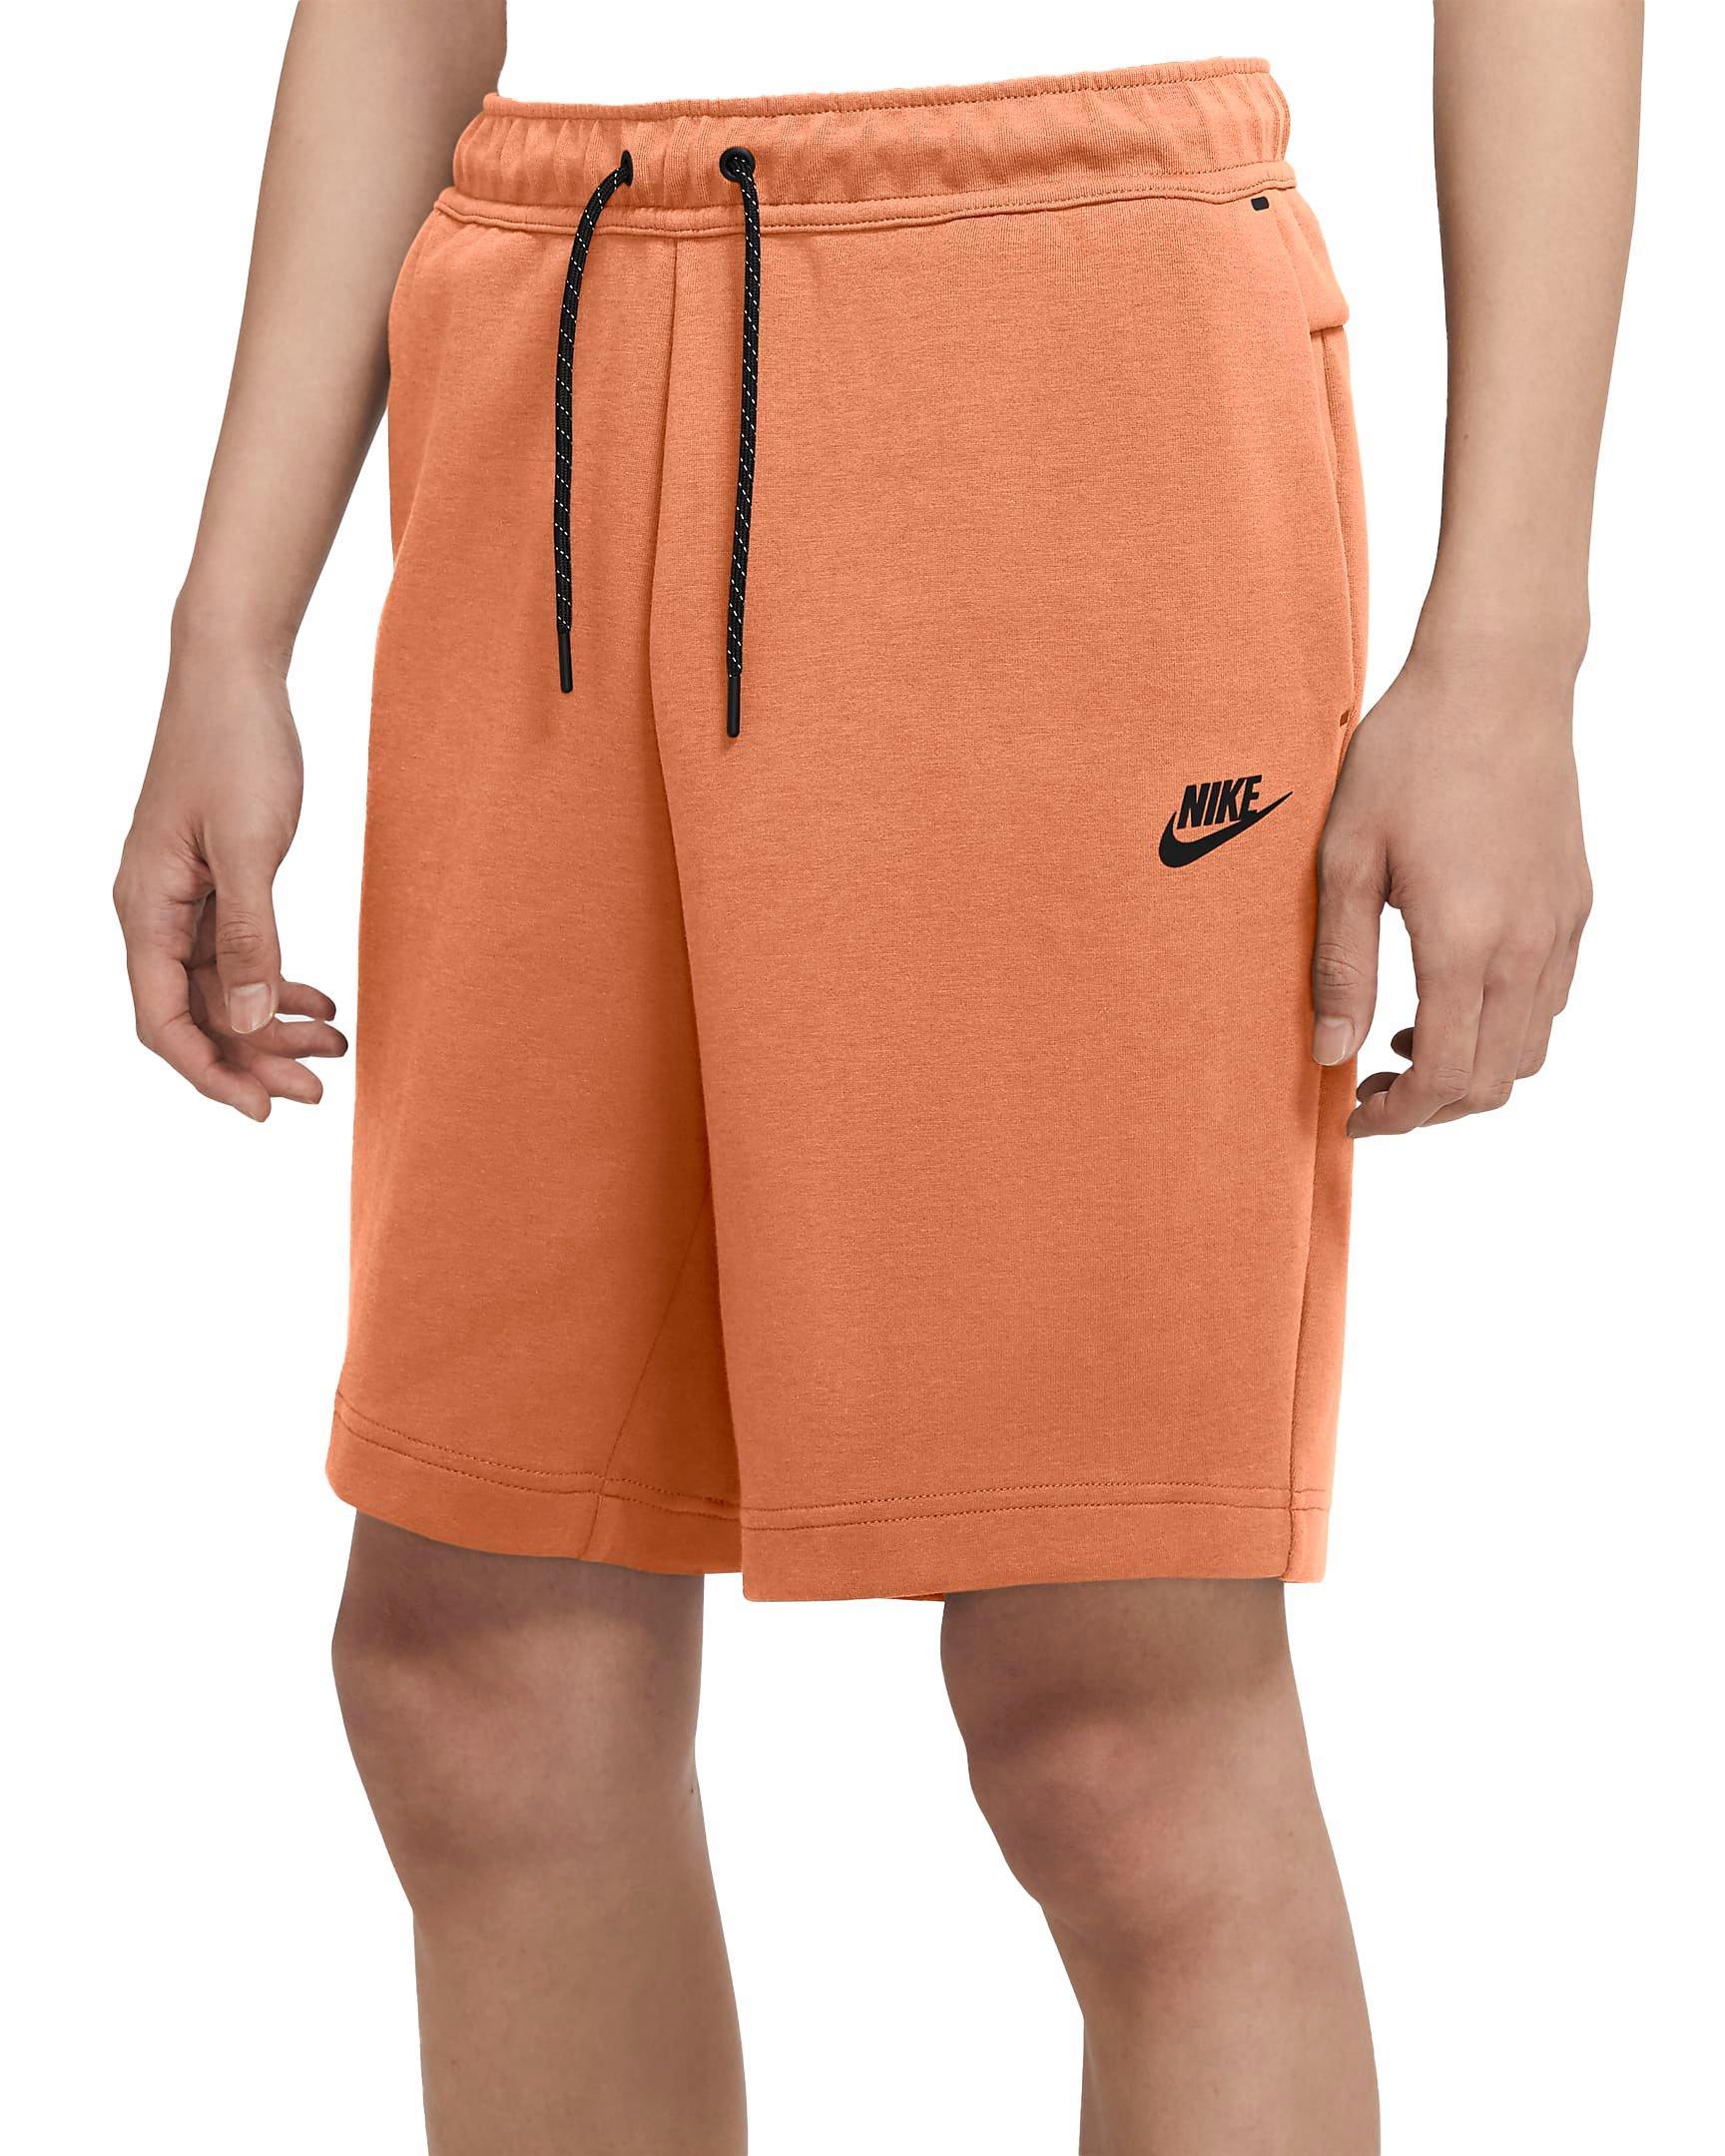 Nike Men's Tech Fleece Shorts - Orange